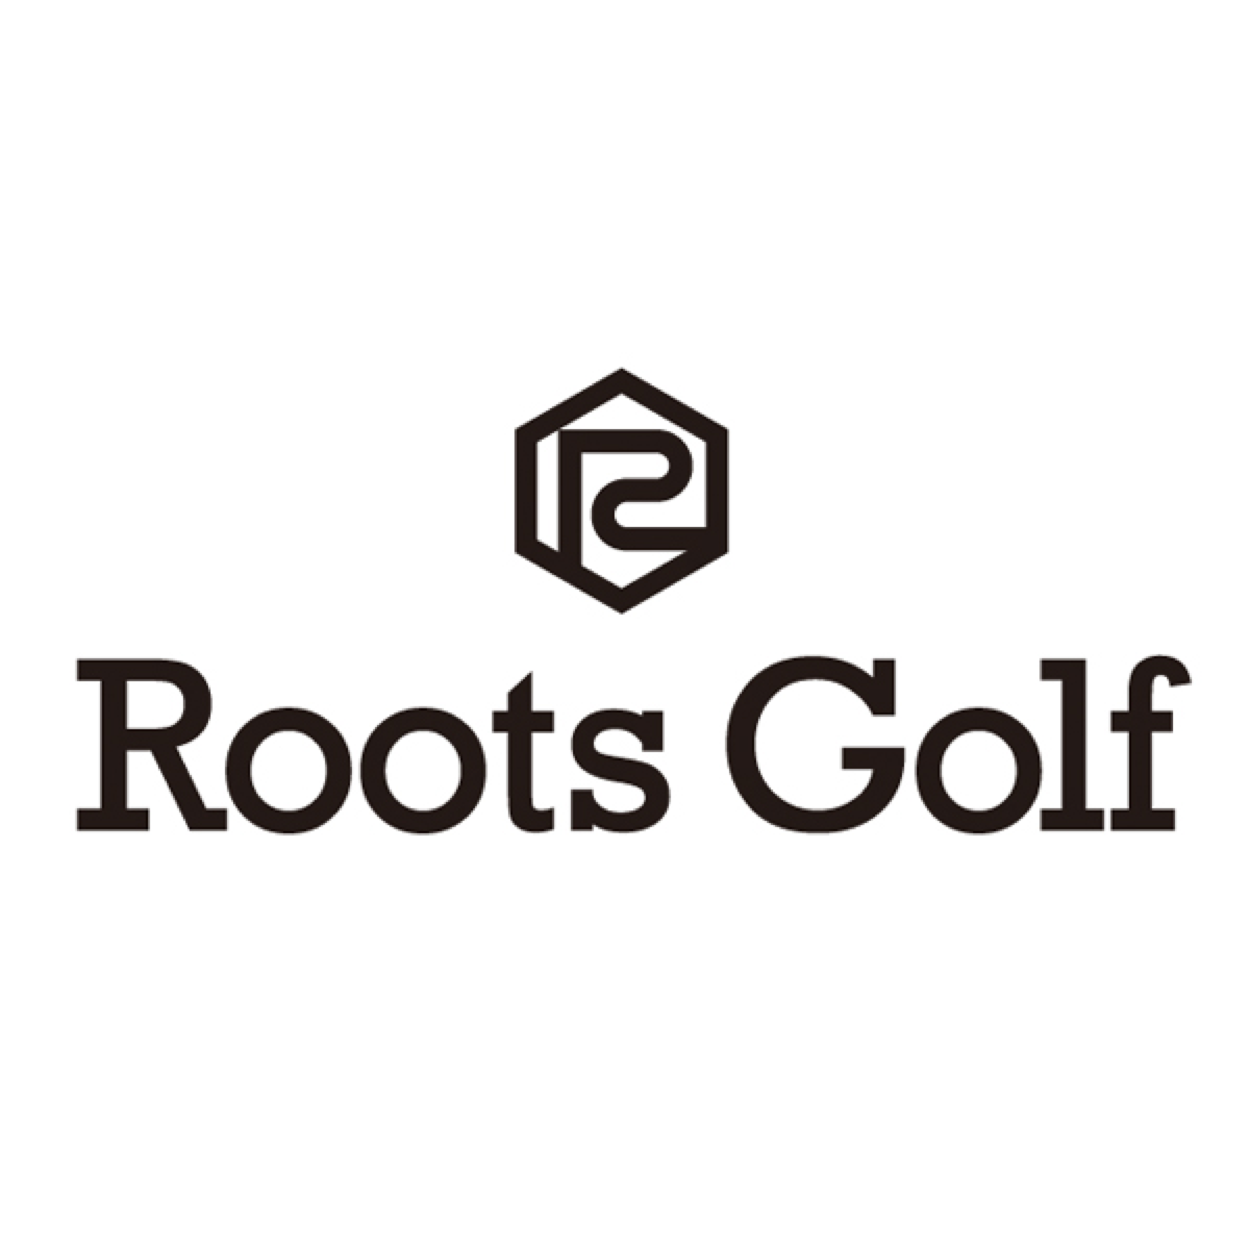 Roots Golf ロゴデザイン